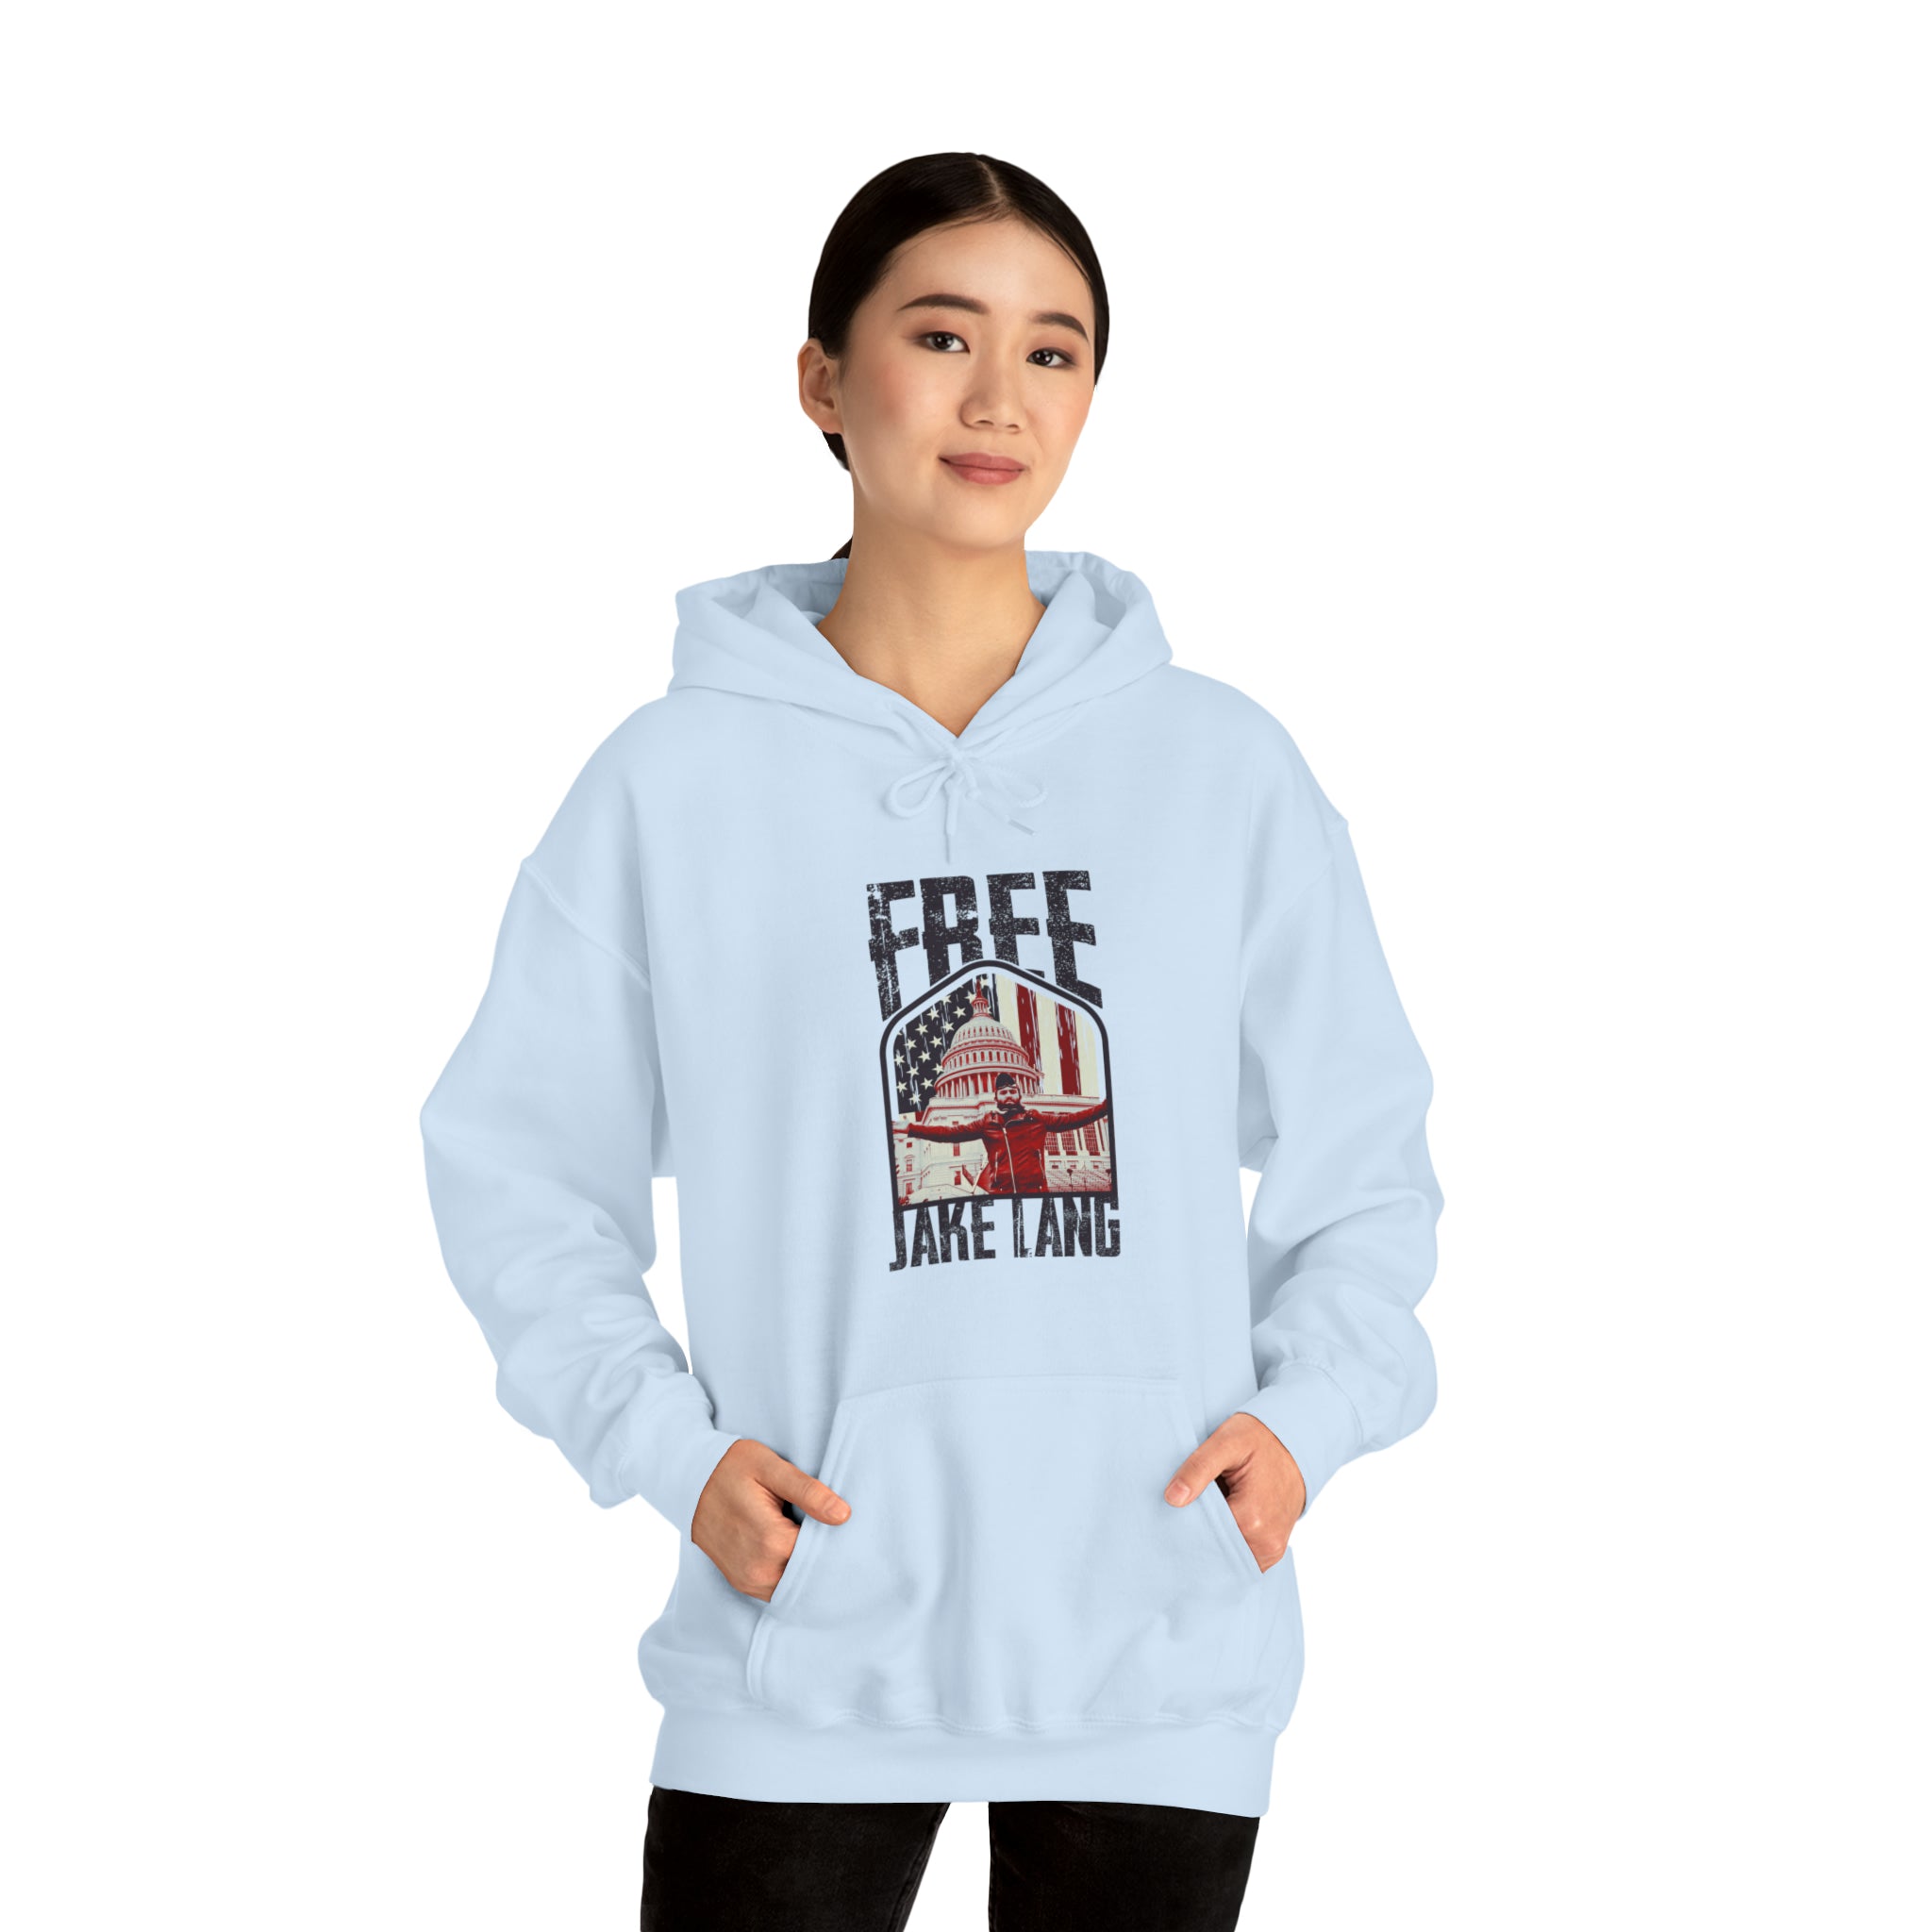 FREE JAKE LANG LIMITED EDITION Hooded Sweatshirt